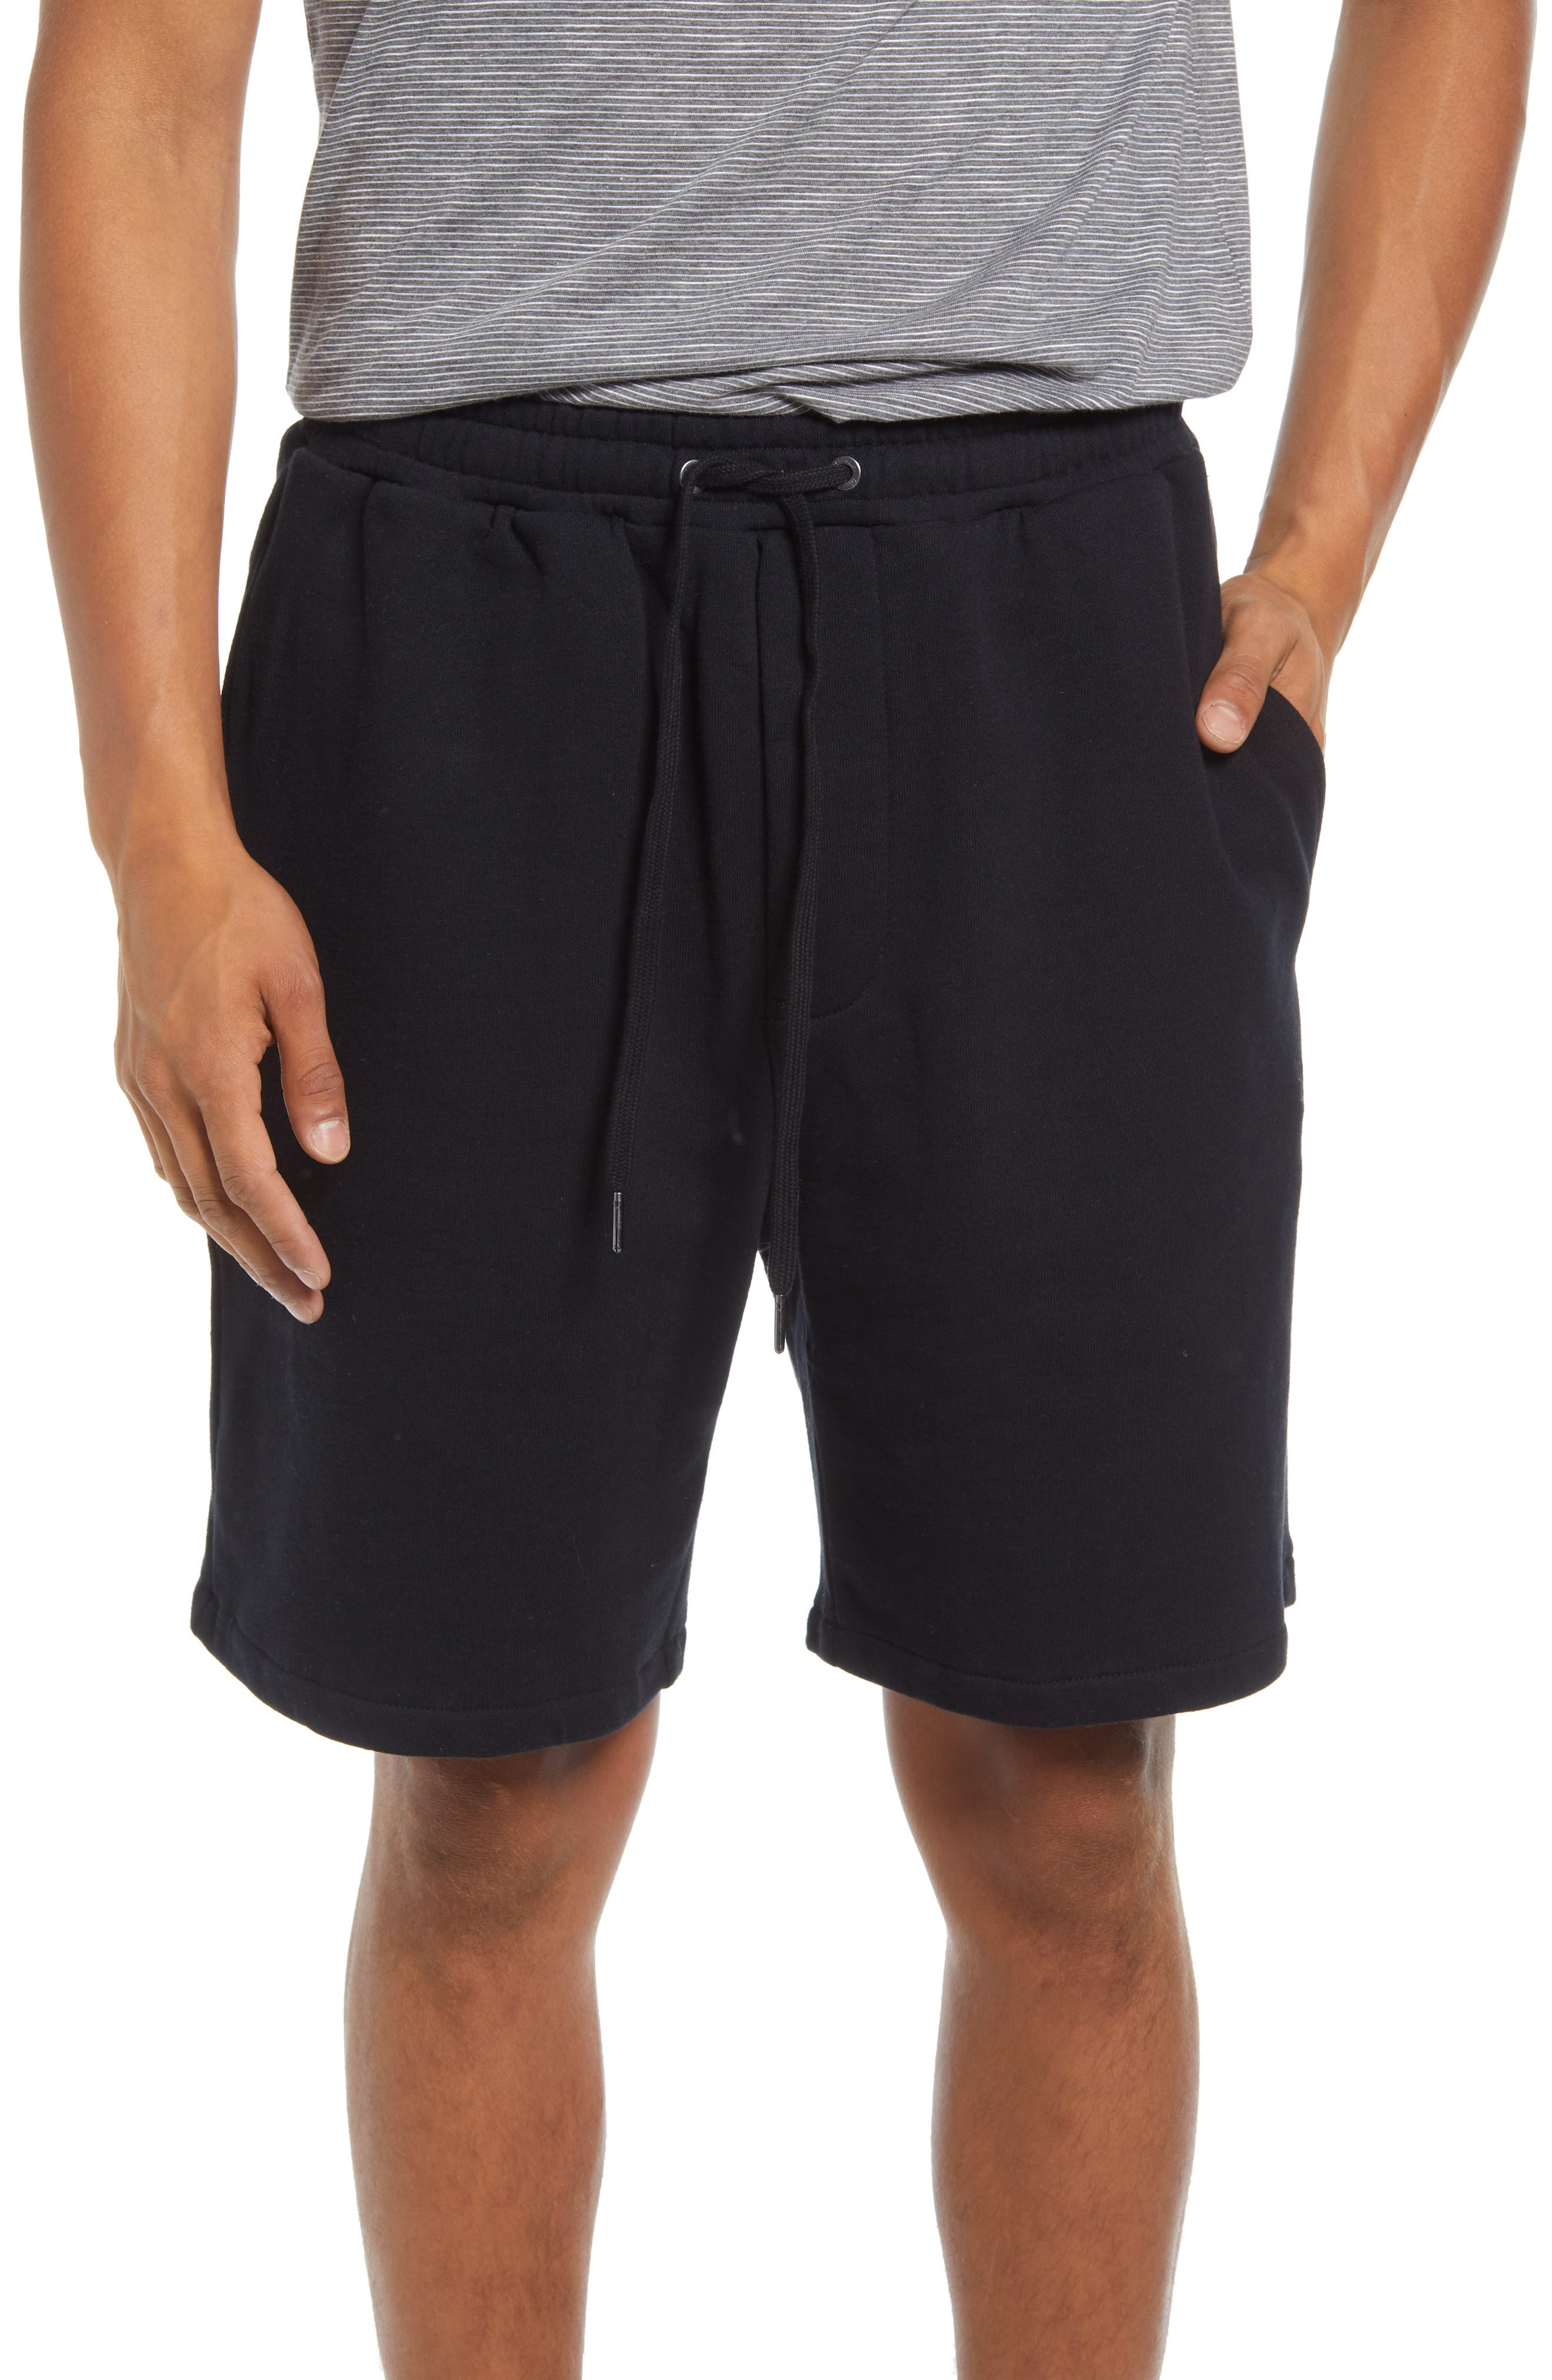 Ksubi Men's Lofi Shorts in Black at Nordstrom, Size Large